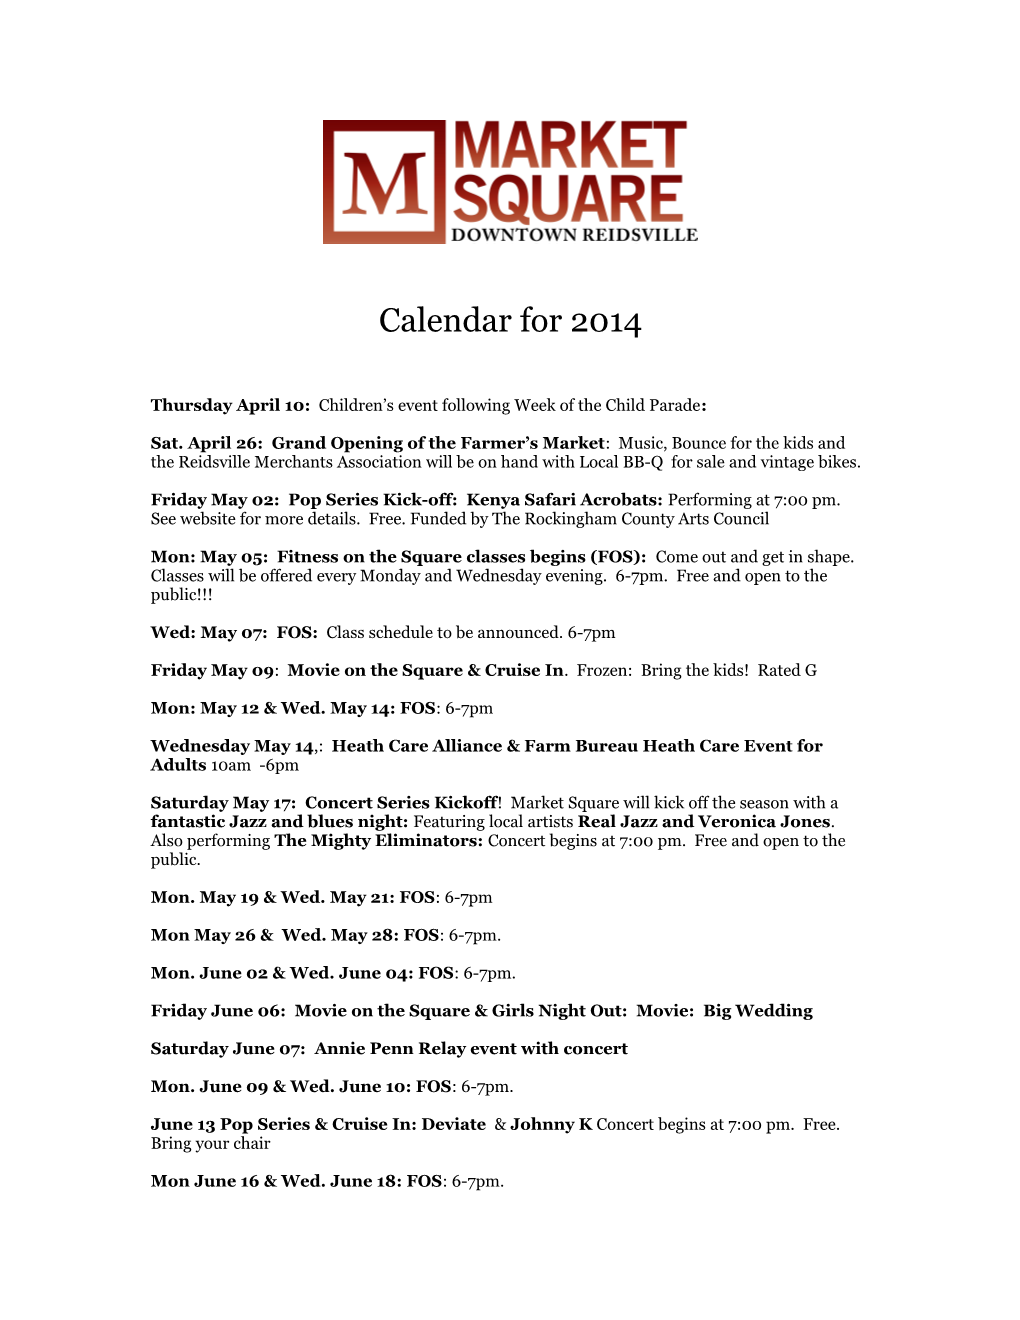 Market Square Schedule 2011